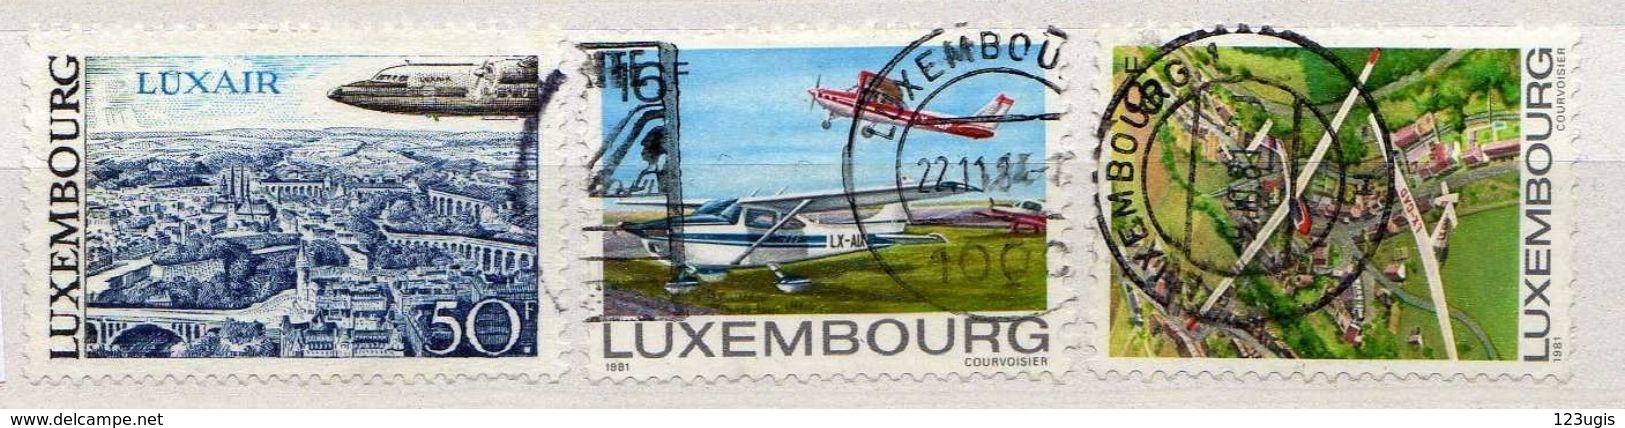 Luxemburg Lot, Gestempelt, Flugpost / Flugzeug / Air Mail / Planes [170717XXI] - Gebraucht